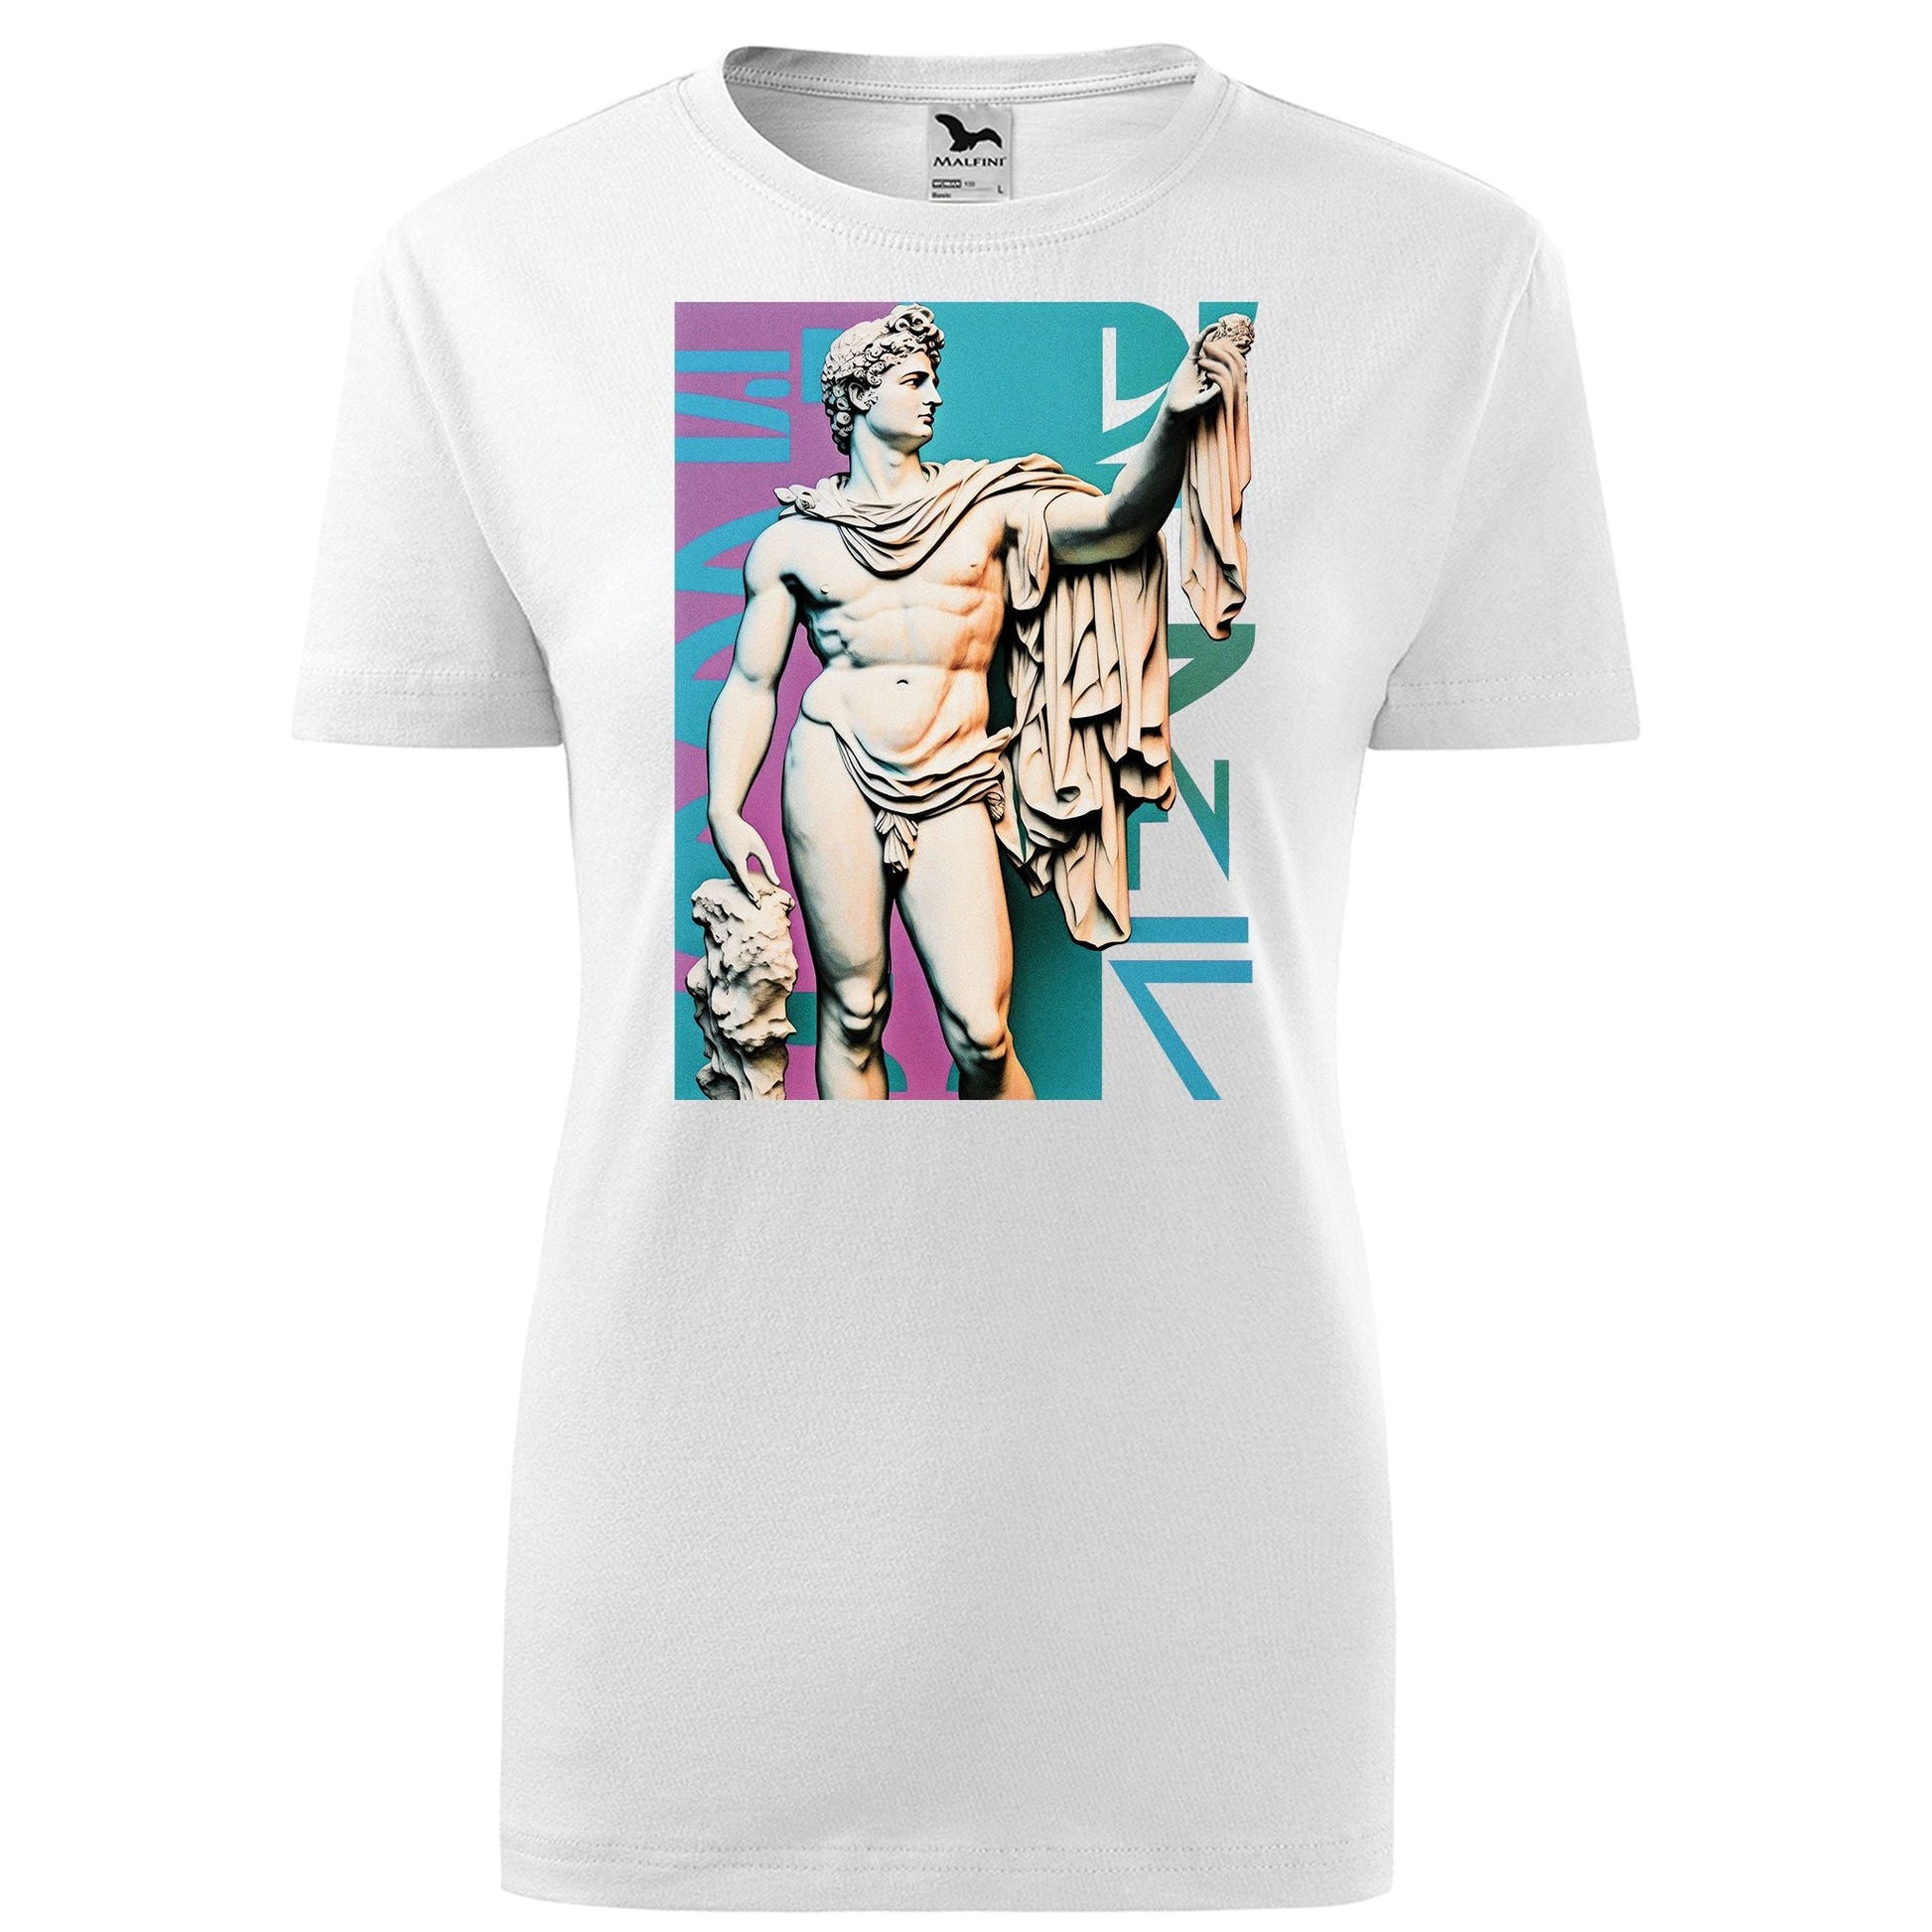 Apollo vaporwave t-shirt - rvdesignprint